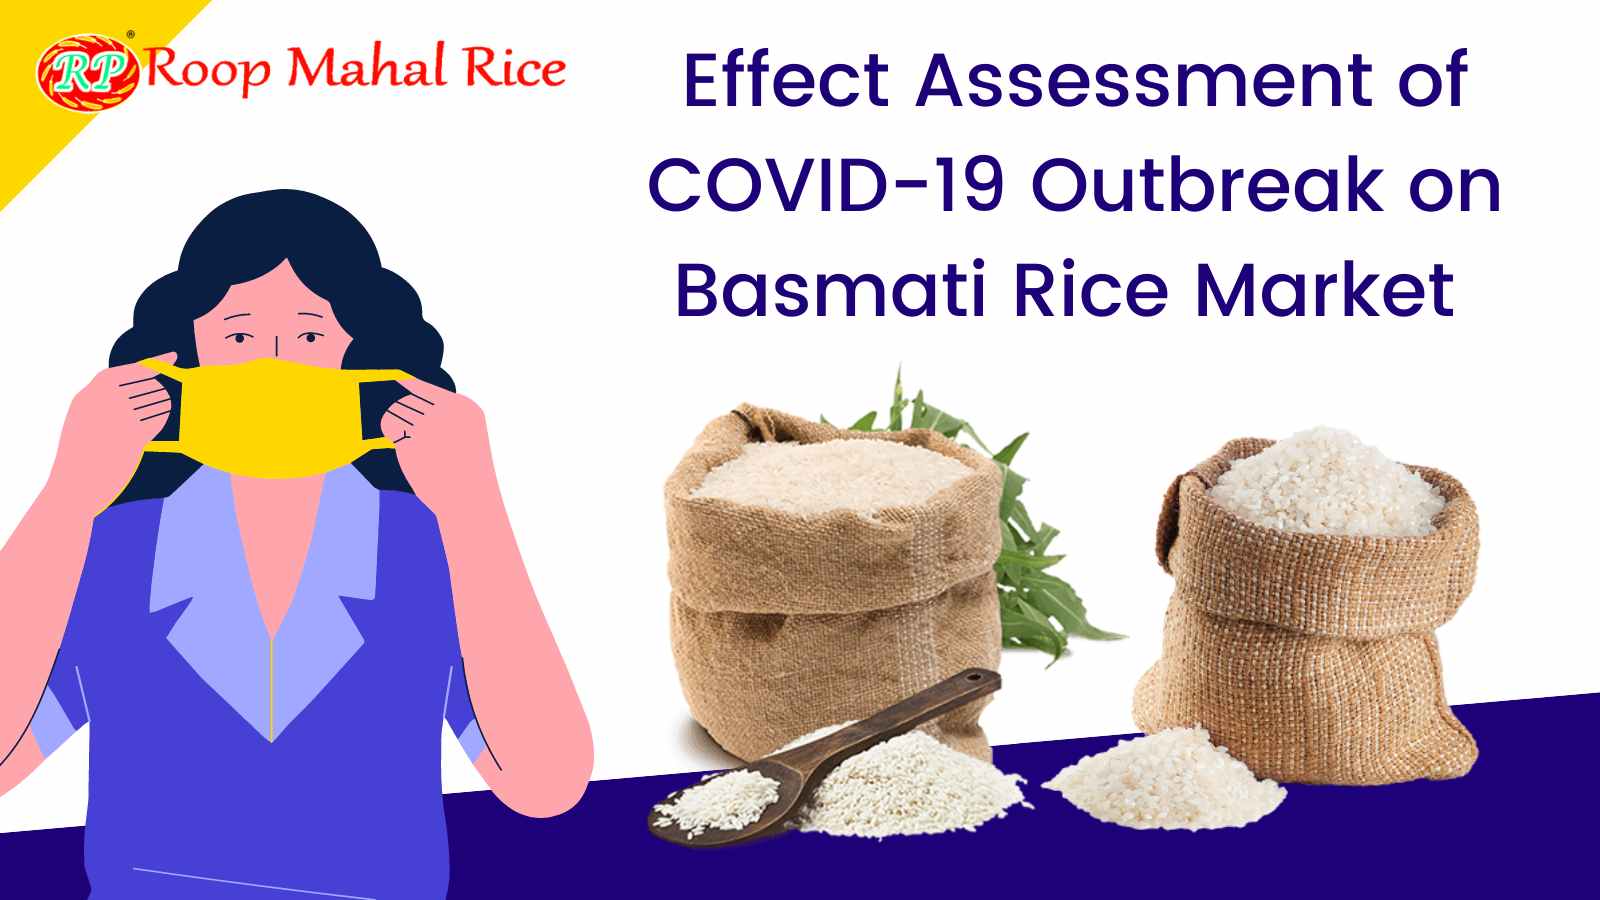 Basmati rice market